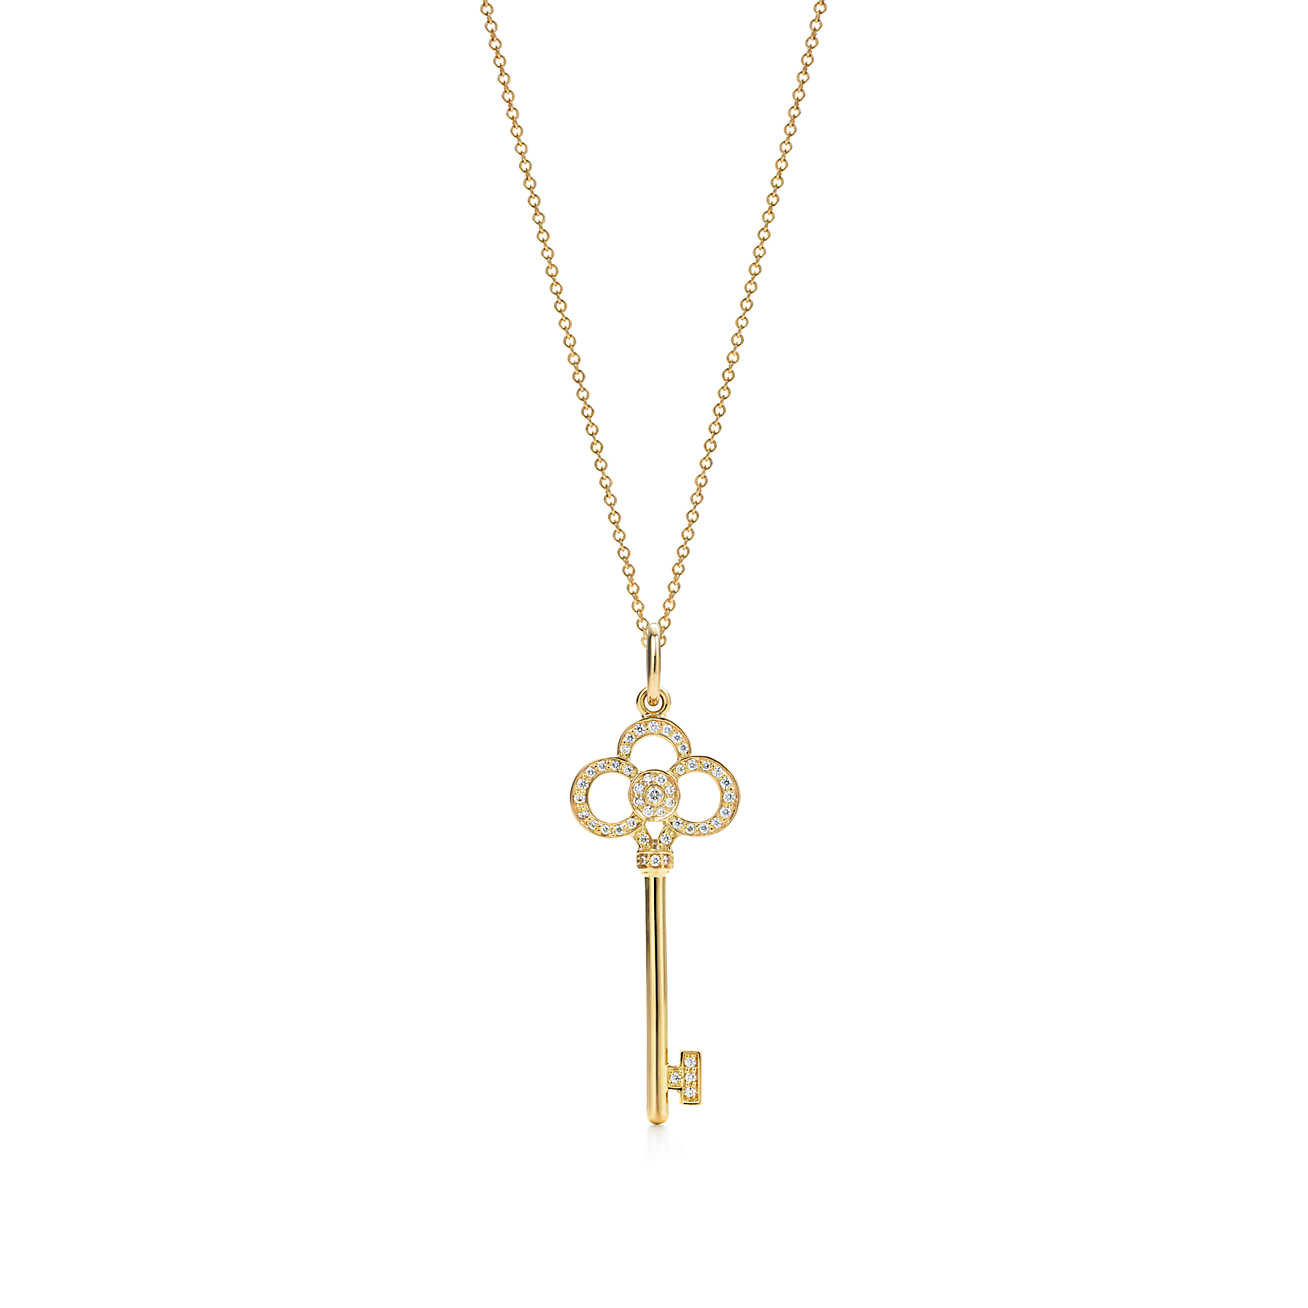 Tiffany Keys 18k 金镶钻心冠钥匙吊坠。